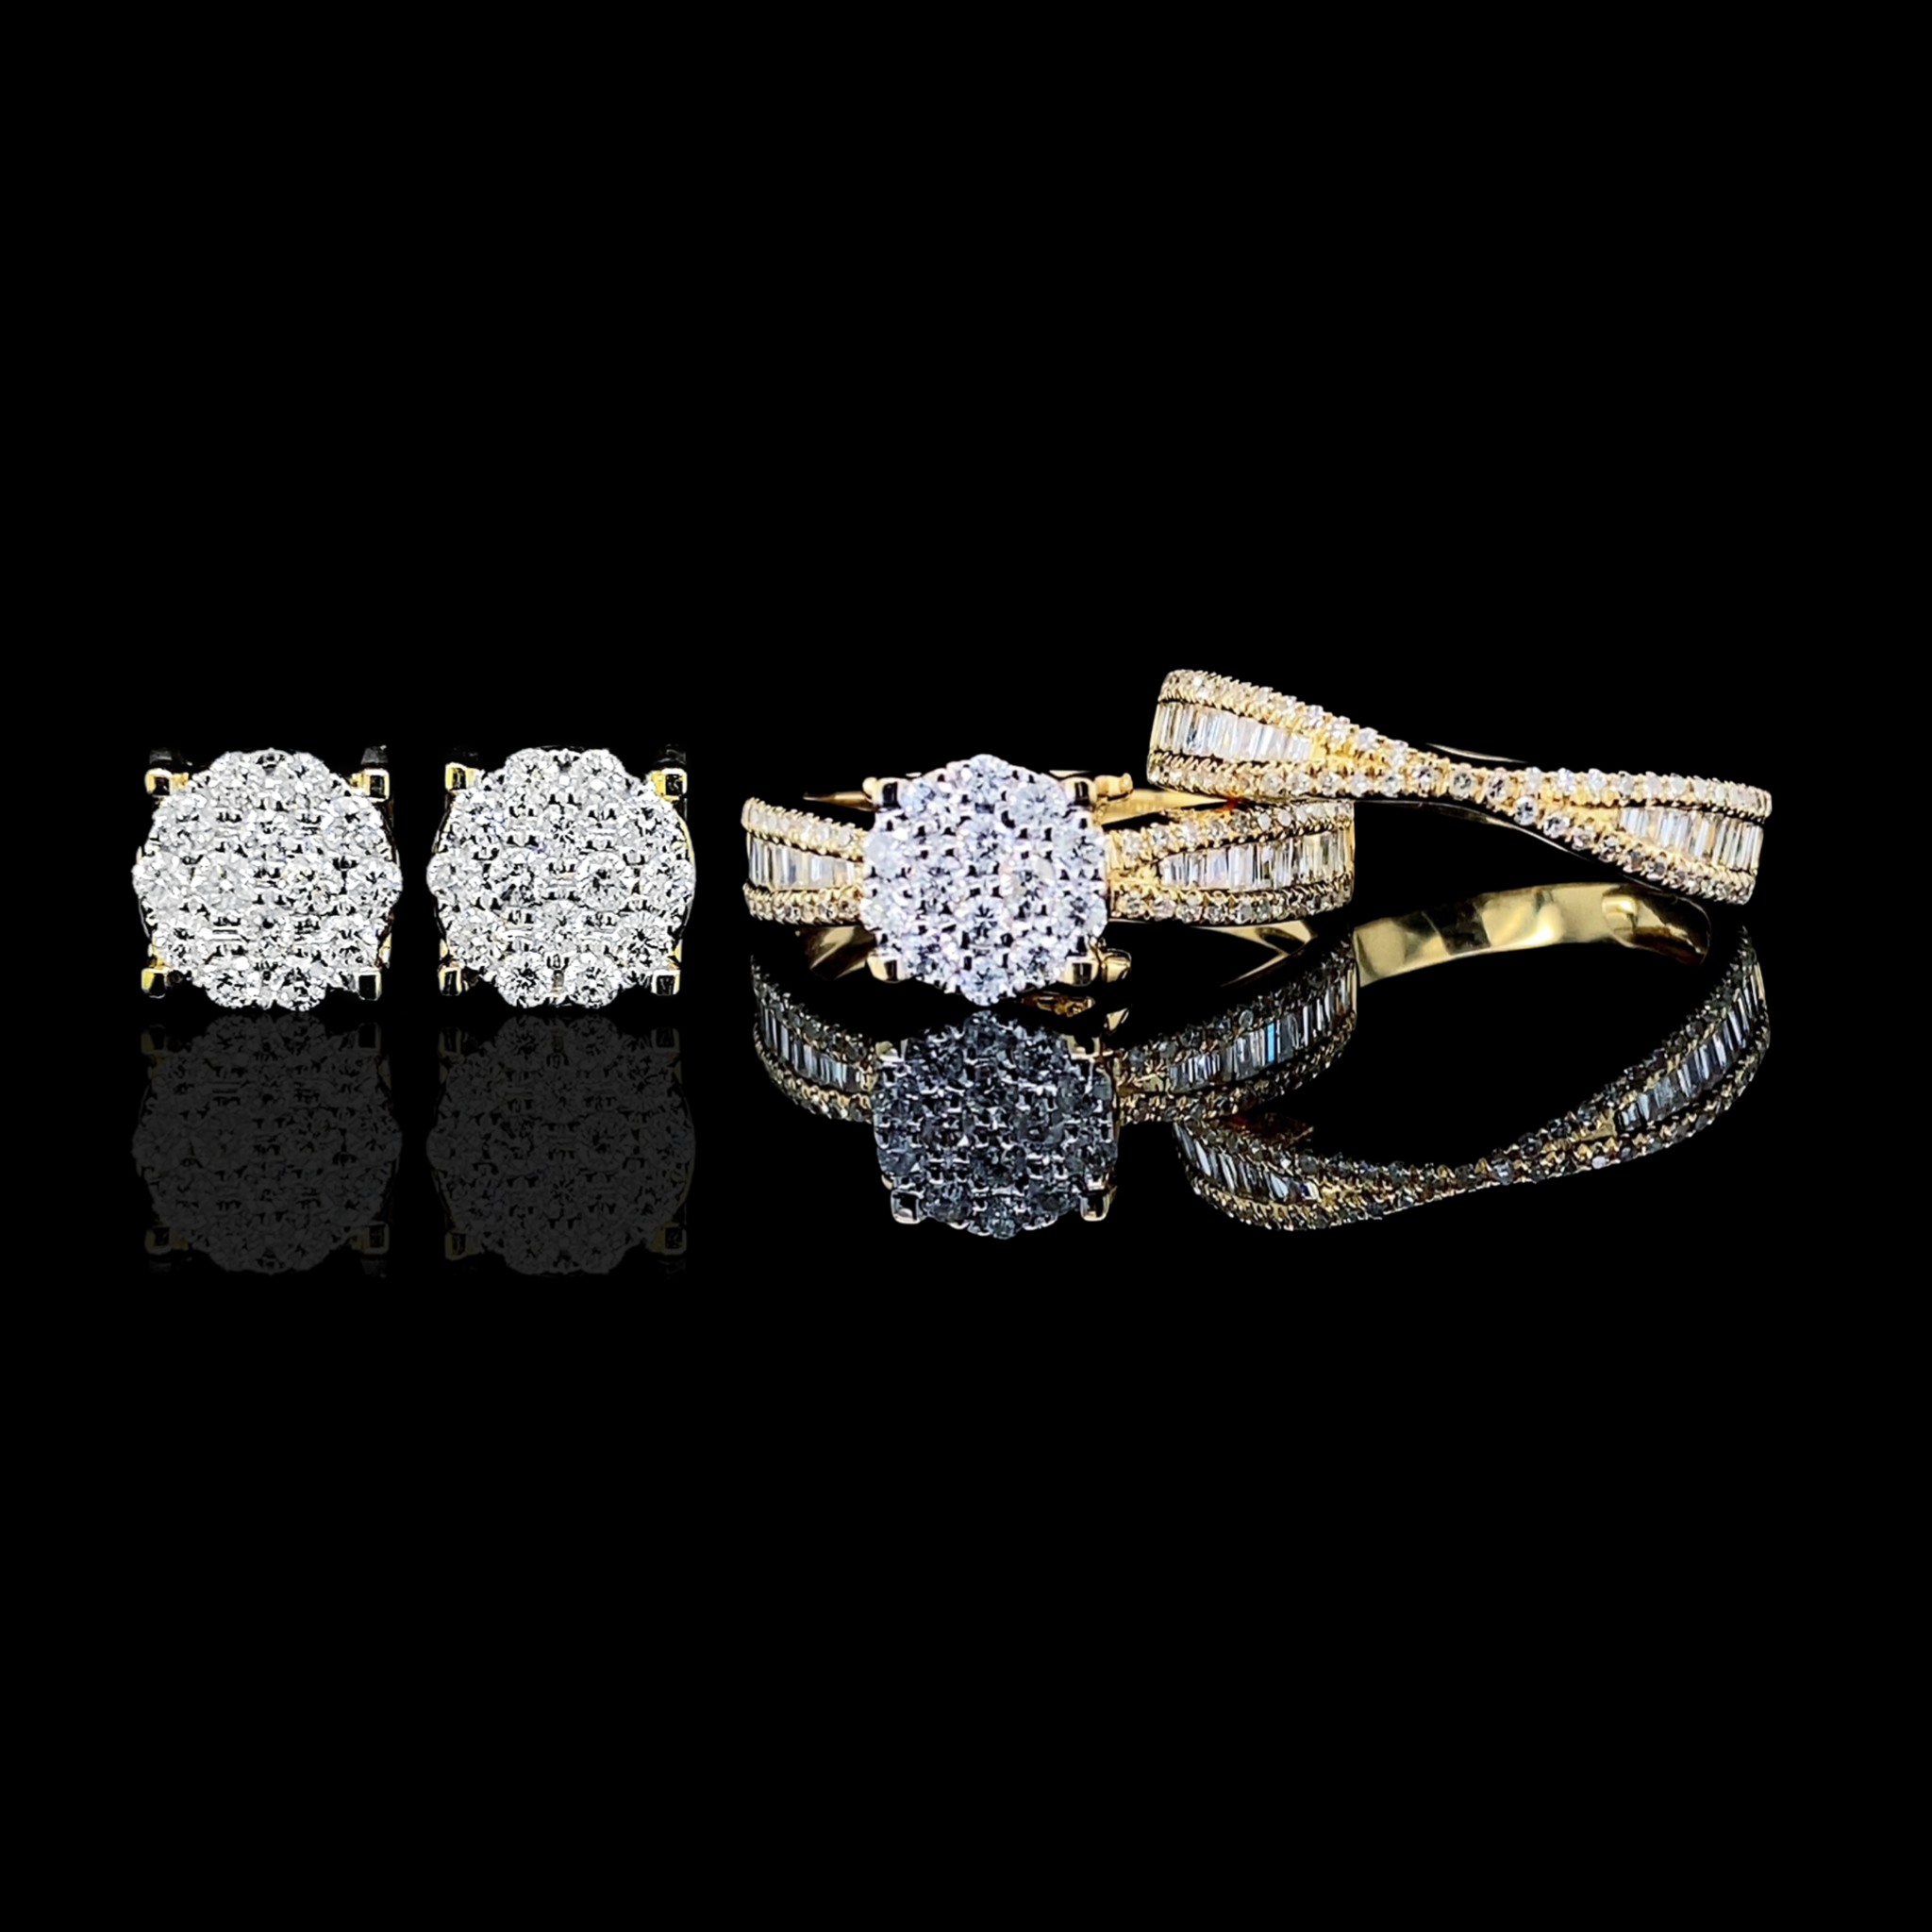 Golden Round Paved Twin Ring Diamond Jewelry Set 14Kt